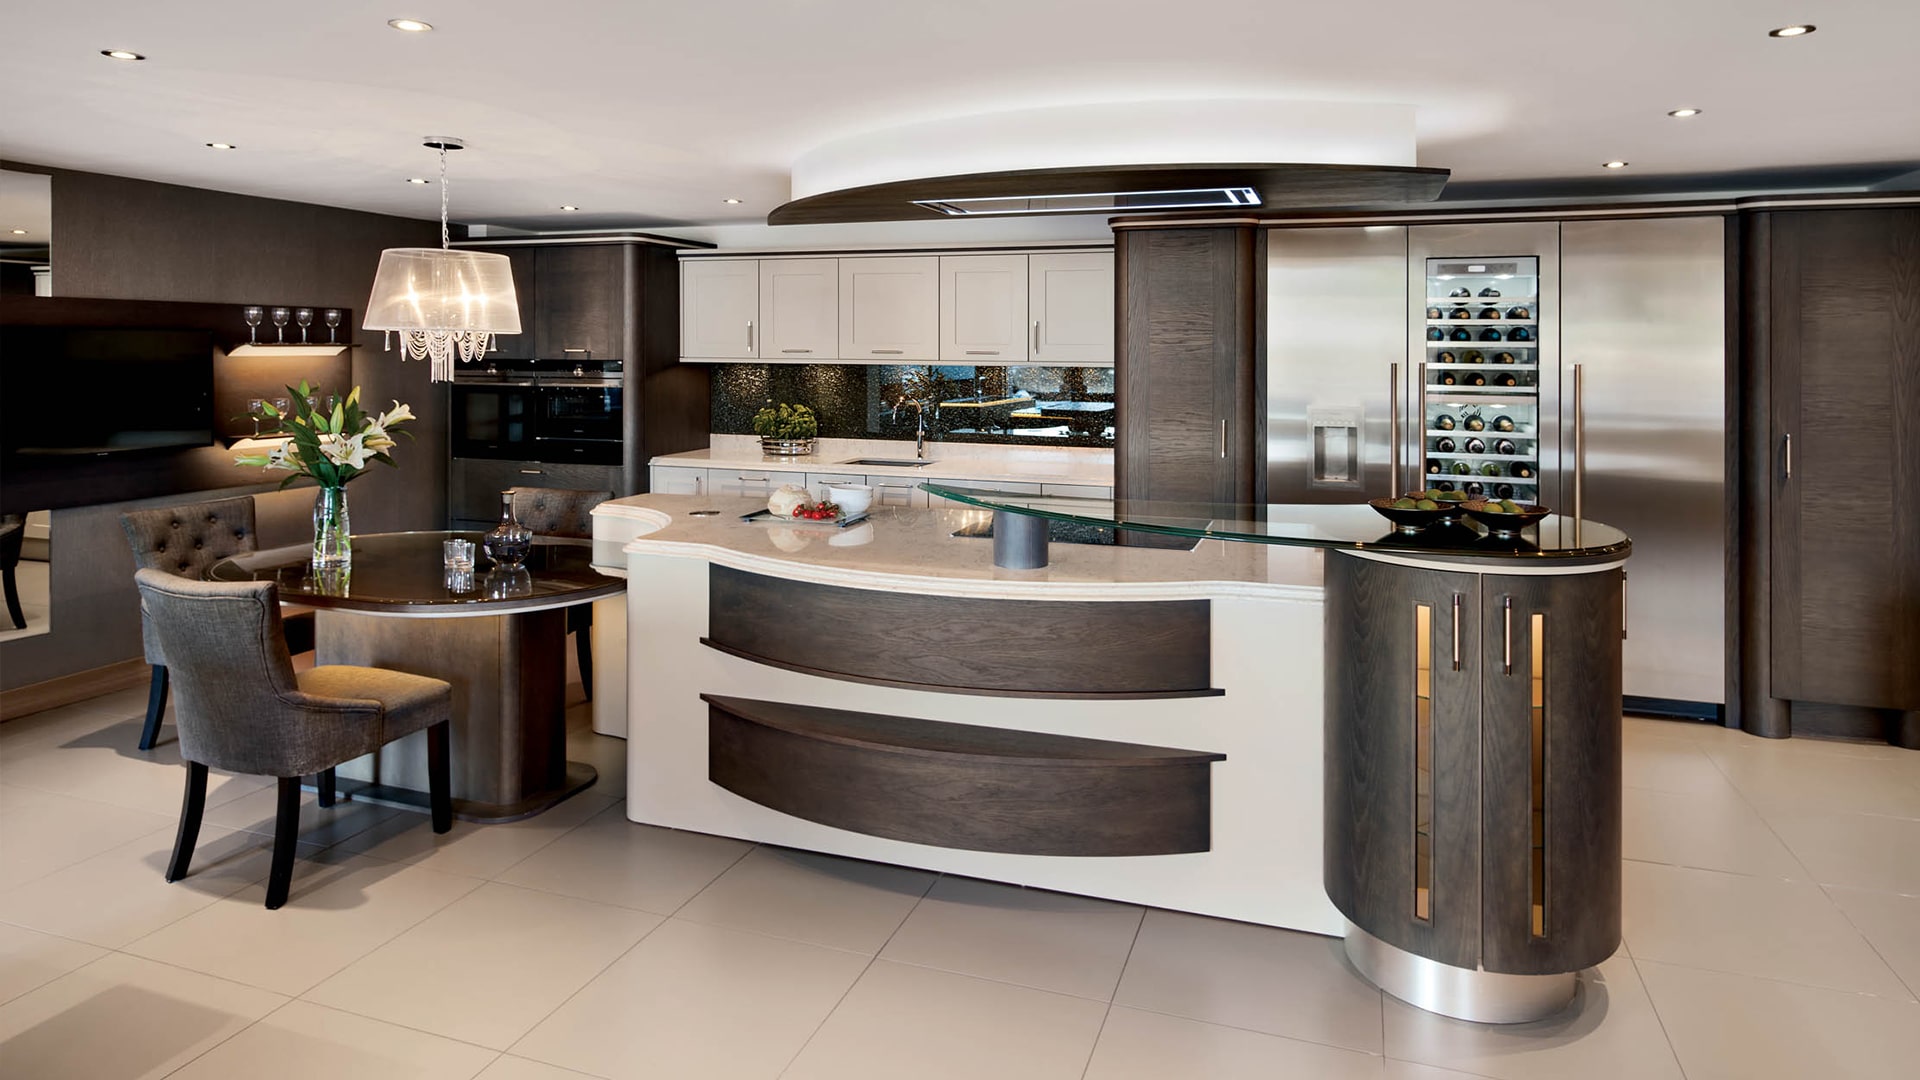 Luxury Bespoke Callerton Kitchens by J.S. Geddes featuring light beige units and dark wooden finishes